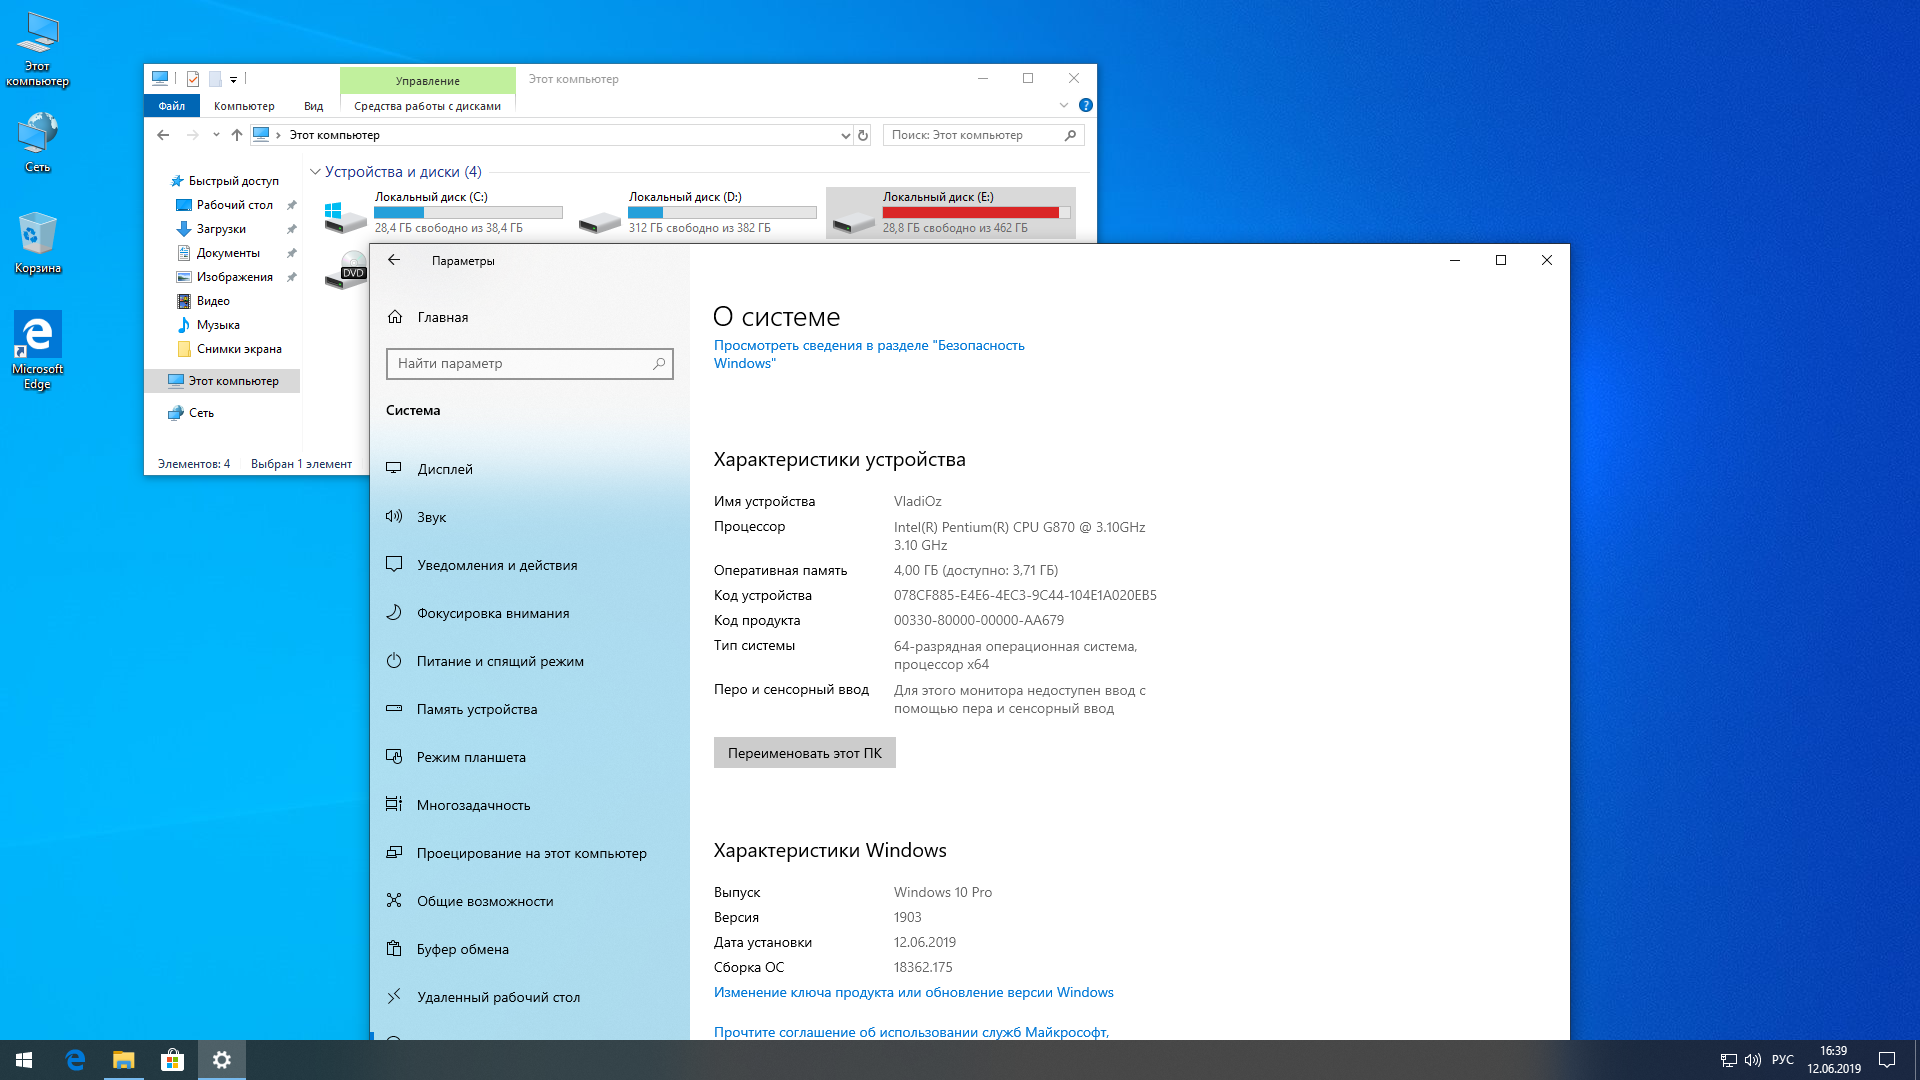 Windows 10 Pro. Windows 10 1903. Windows 10 Rus с активатором 64 bit 1903 оригинальный образ. Windows 10 Pro 1903-18362.267. 10 версия 1903